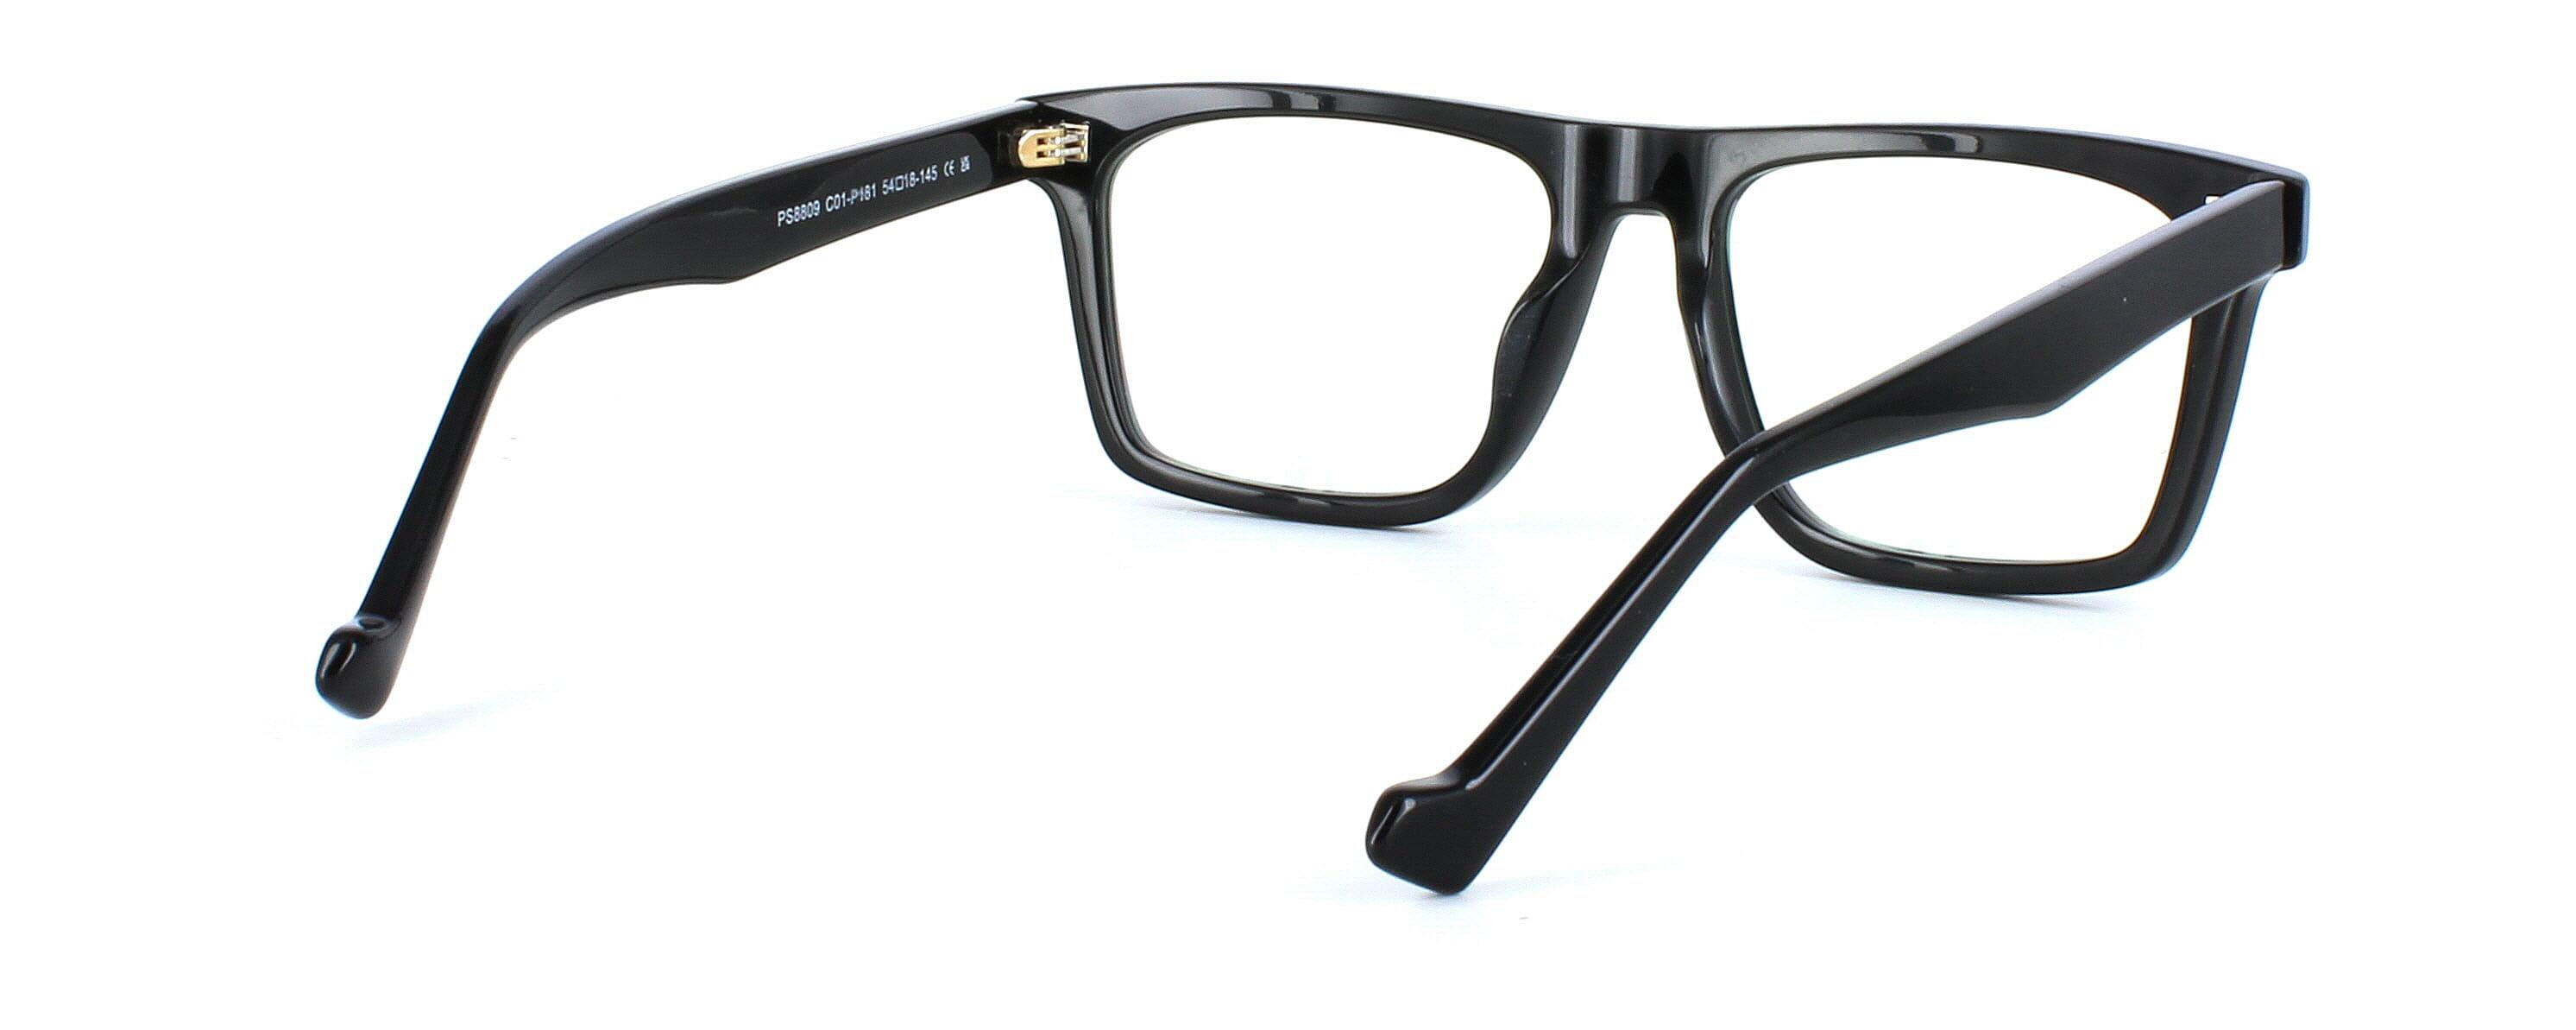 Edward Scotts PS8809 - Shiny black - Gent's bold chunky acetate glasses with rectangular shaped lenses - image view 5